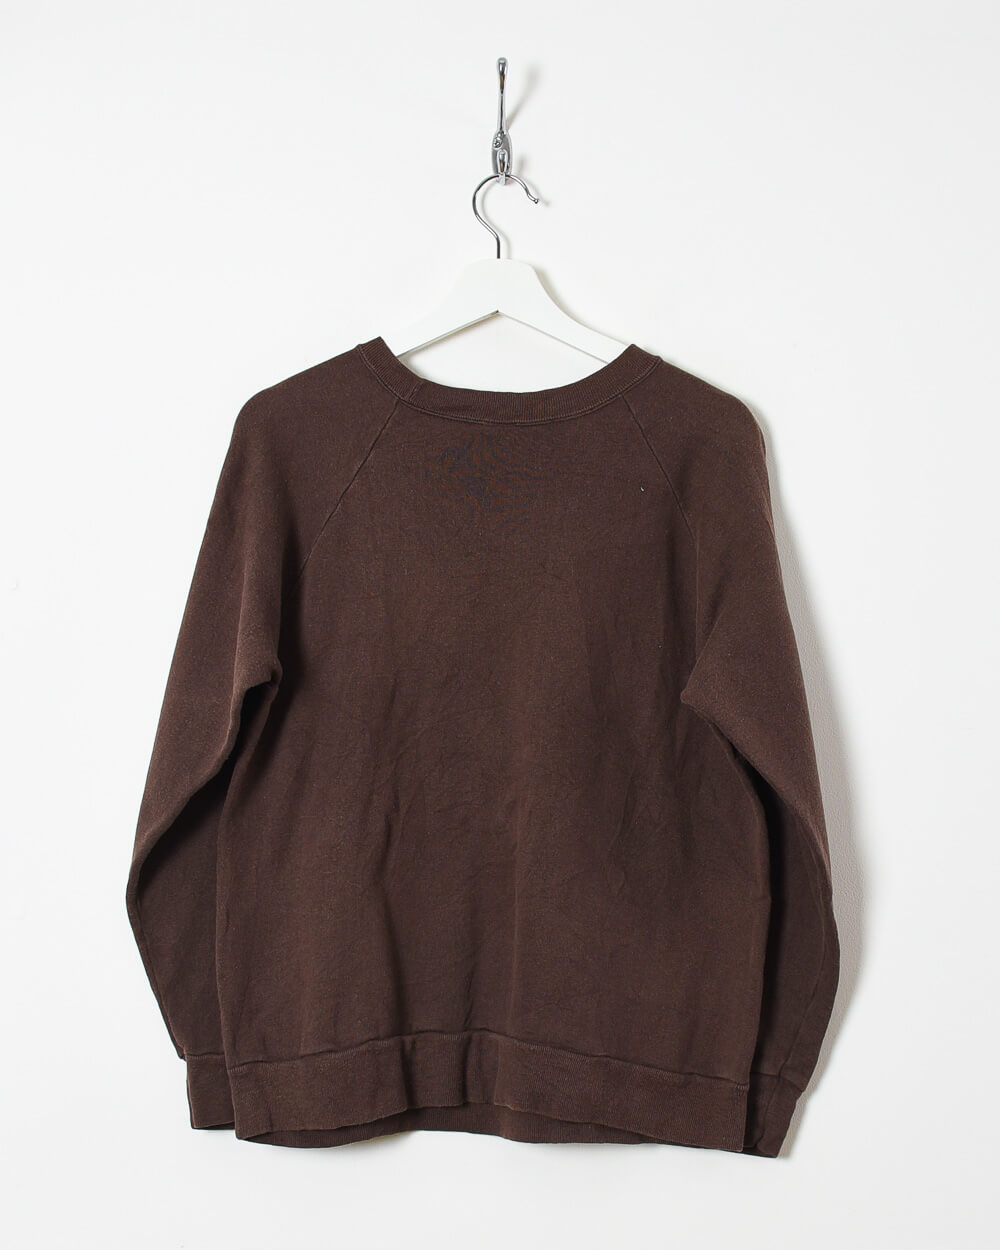 Champion Cleveland Browns Sweatshirt - Medium - Domno Vintage 90s, 80s, 00s Retro and Vintage Clothing 